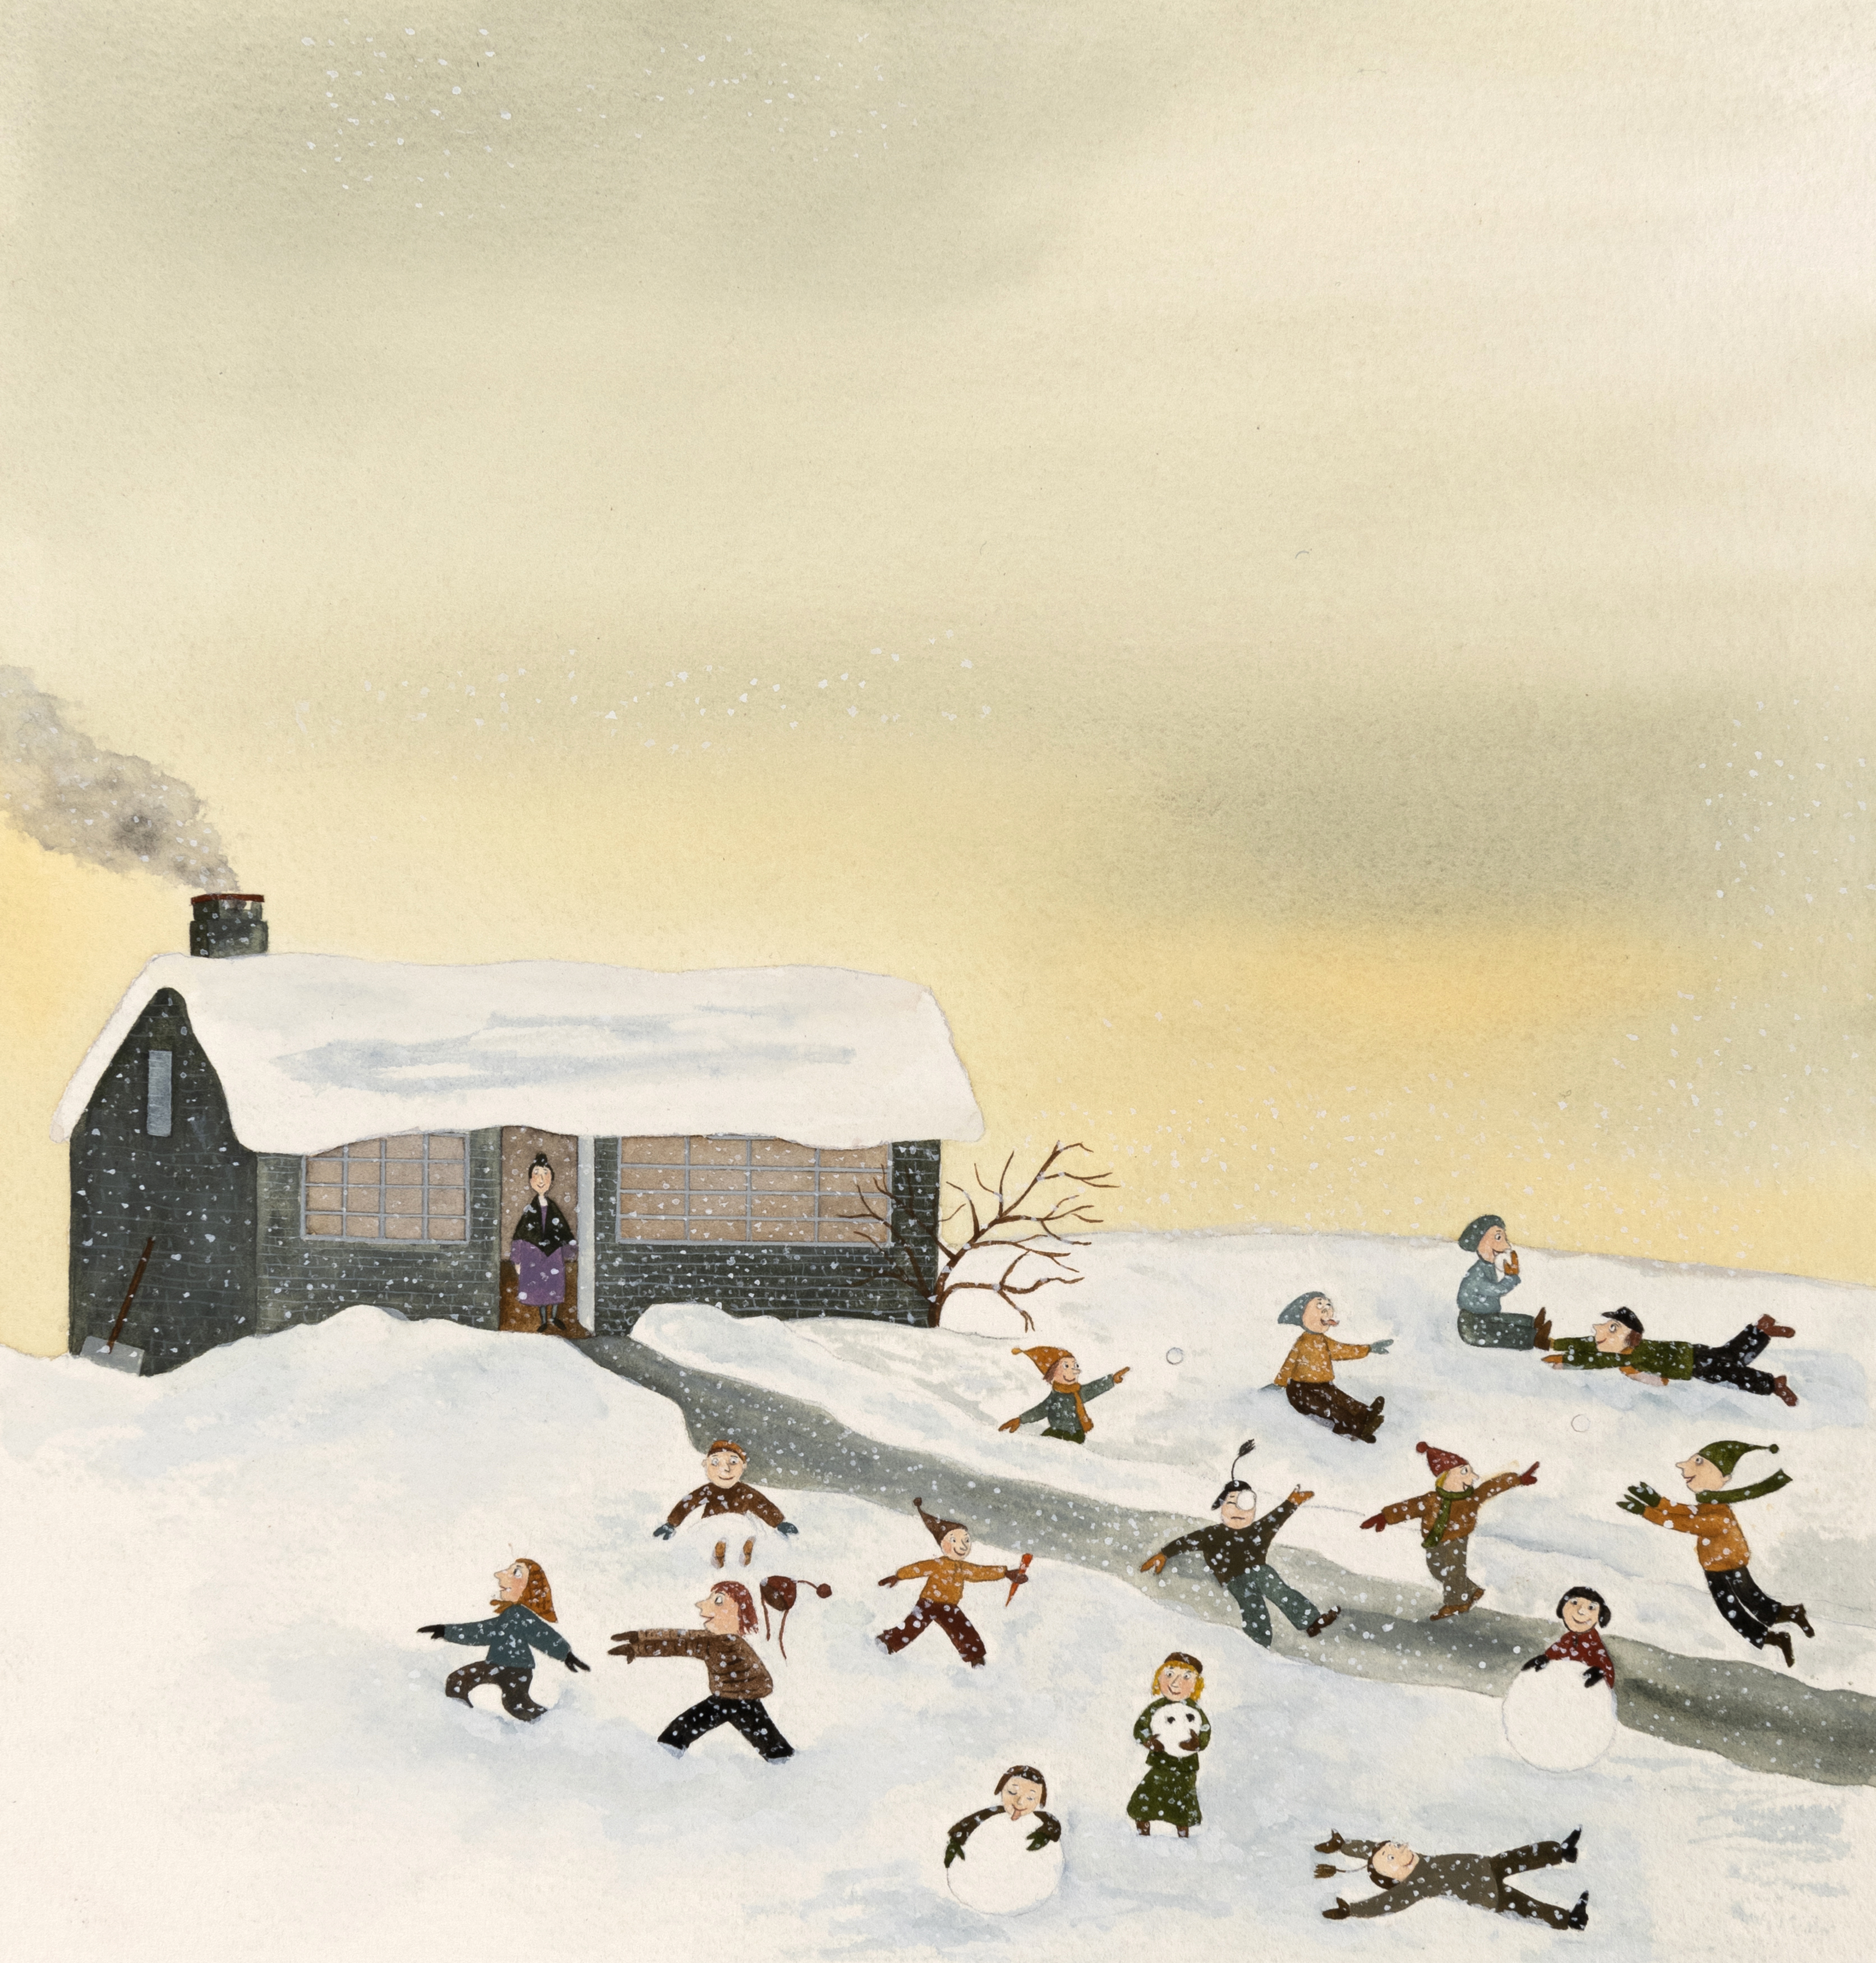 Illustration of children playing on snowy hillside.